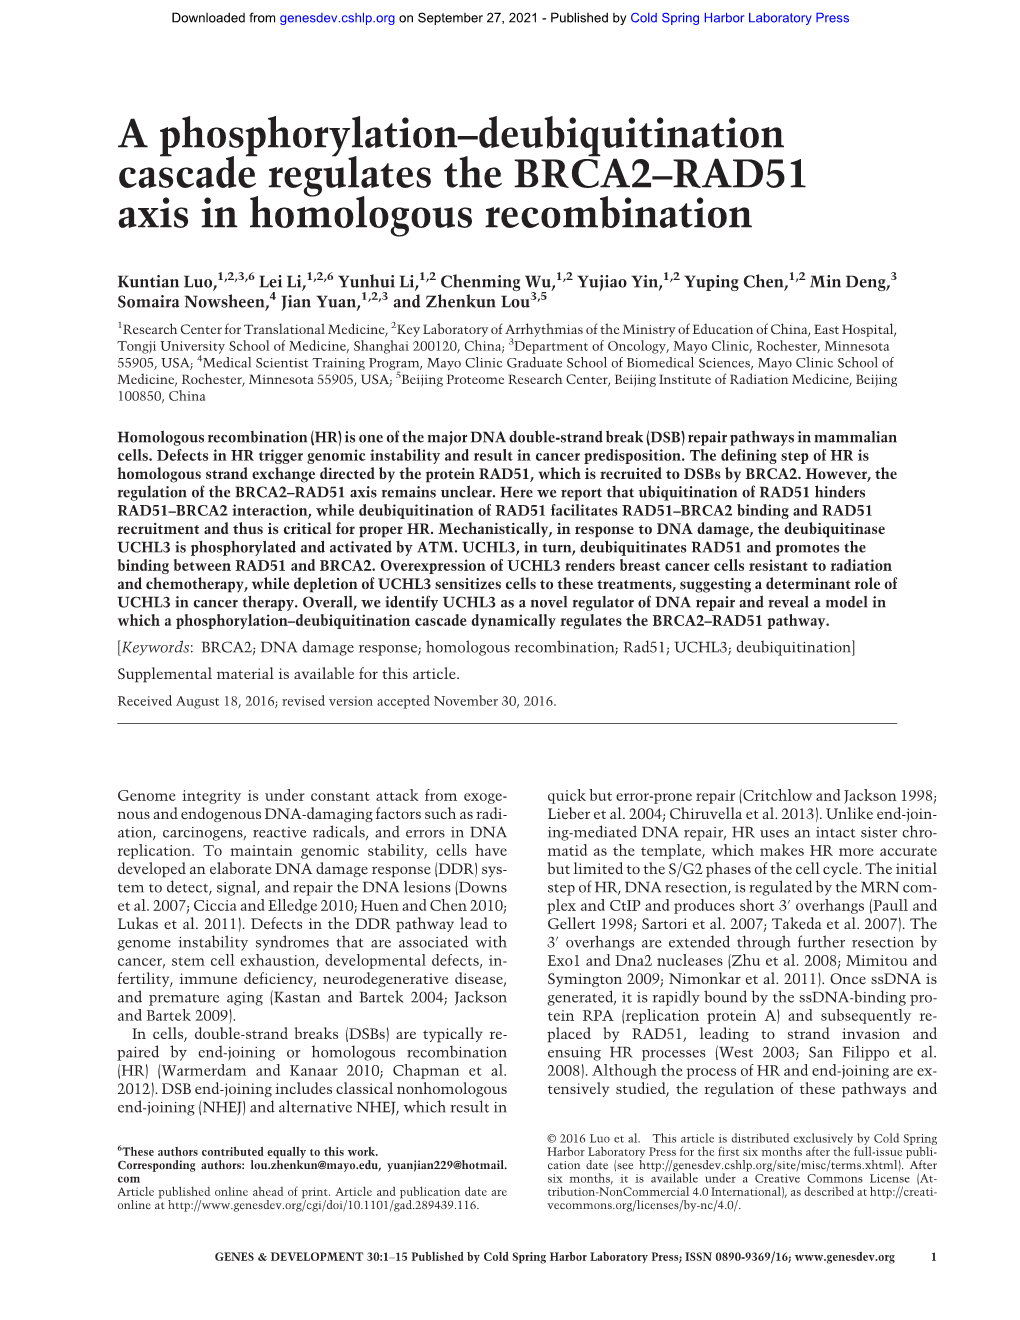 A Phosphorylation–Deubiquitination Cascade Regulates the BRCA2–RAD51 Axis in Homologous Recombination